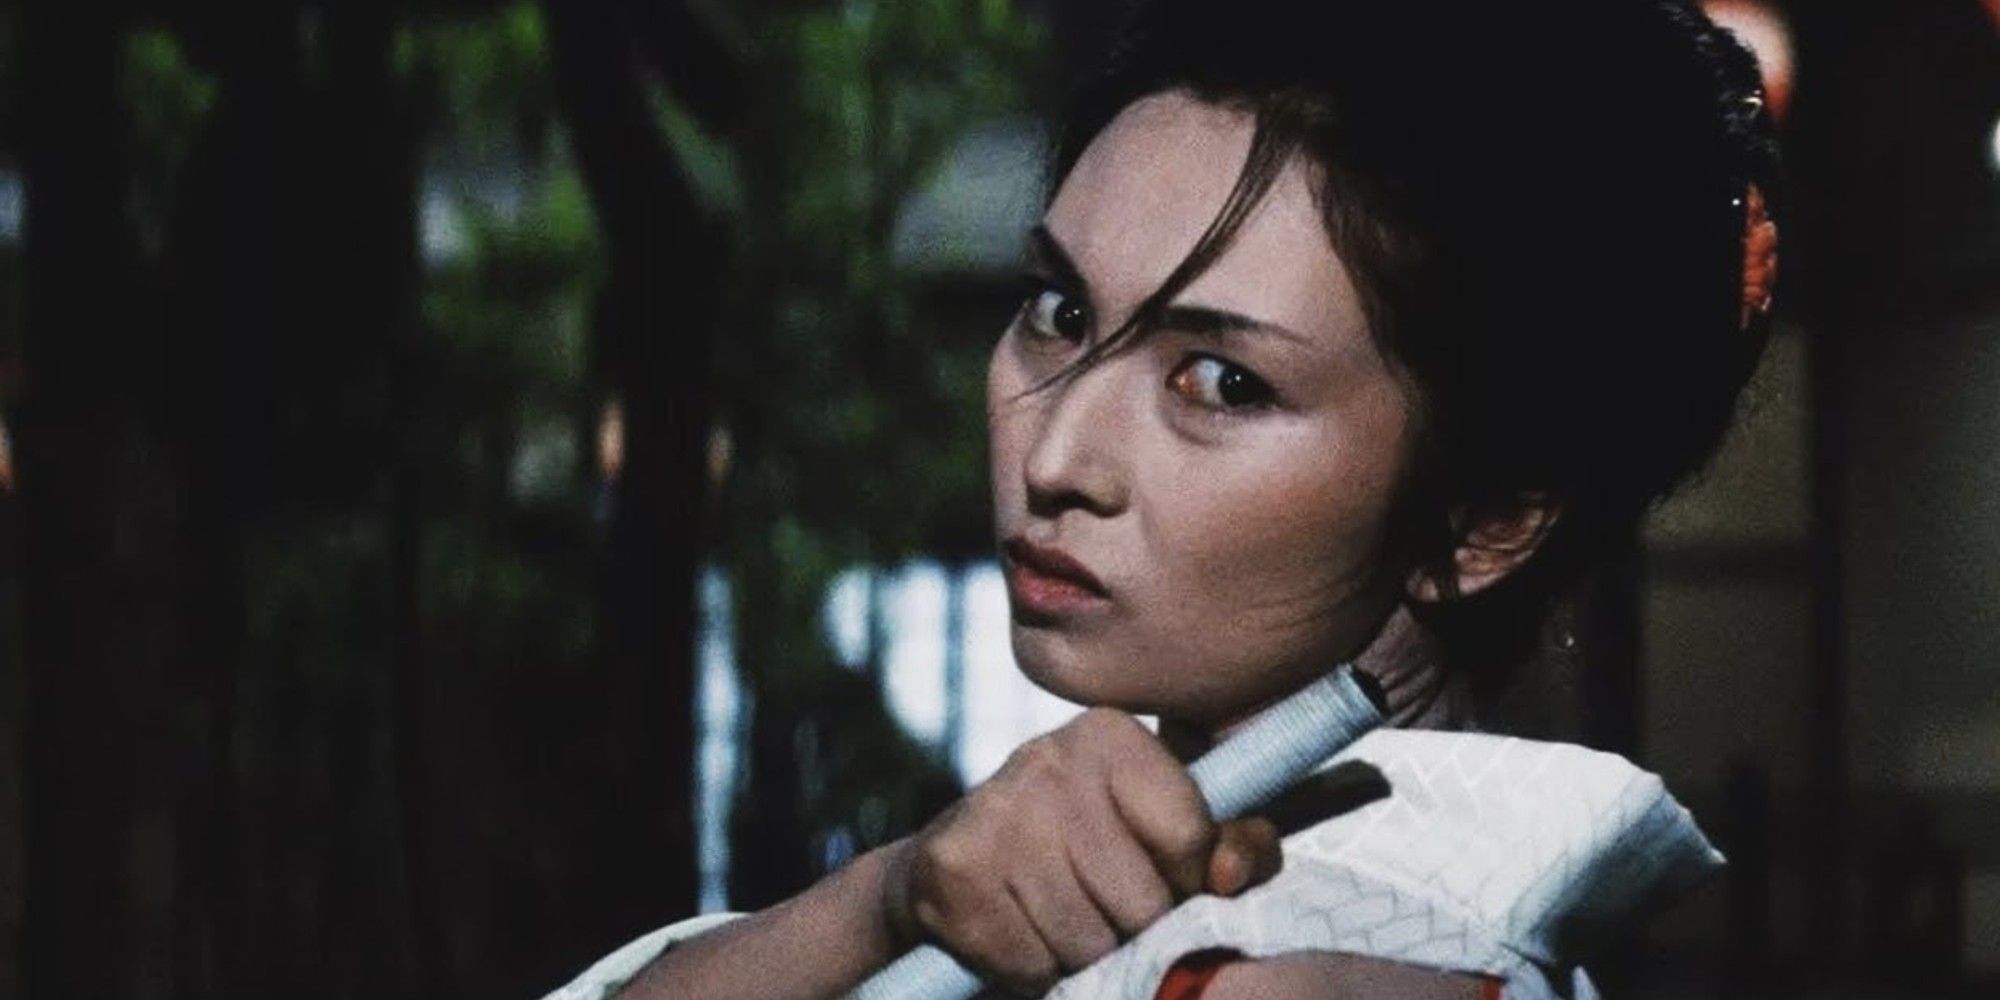 Meiko Kaji as Yuki Kashima in Lady Snowblood